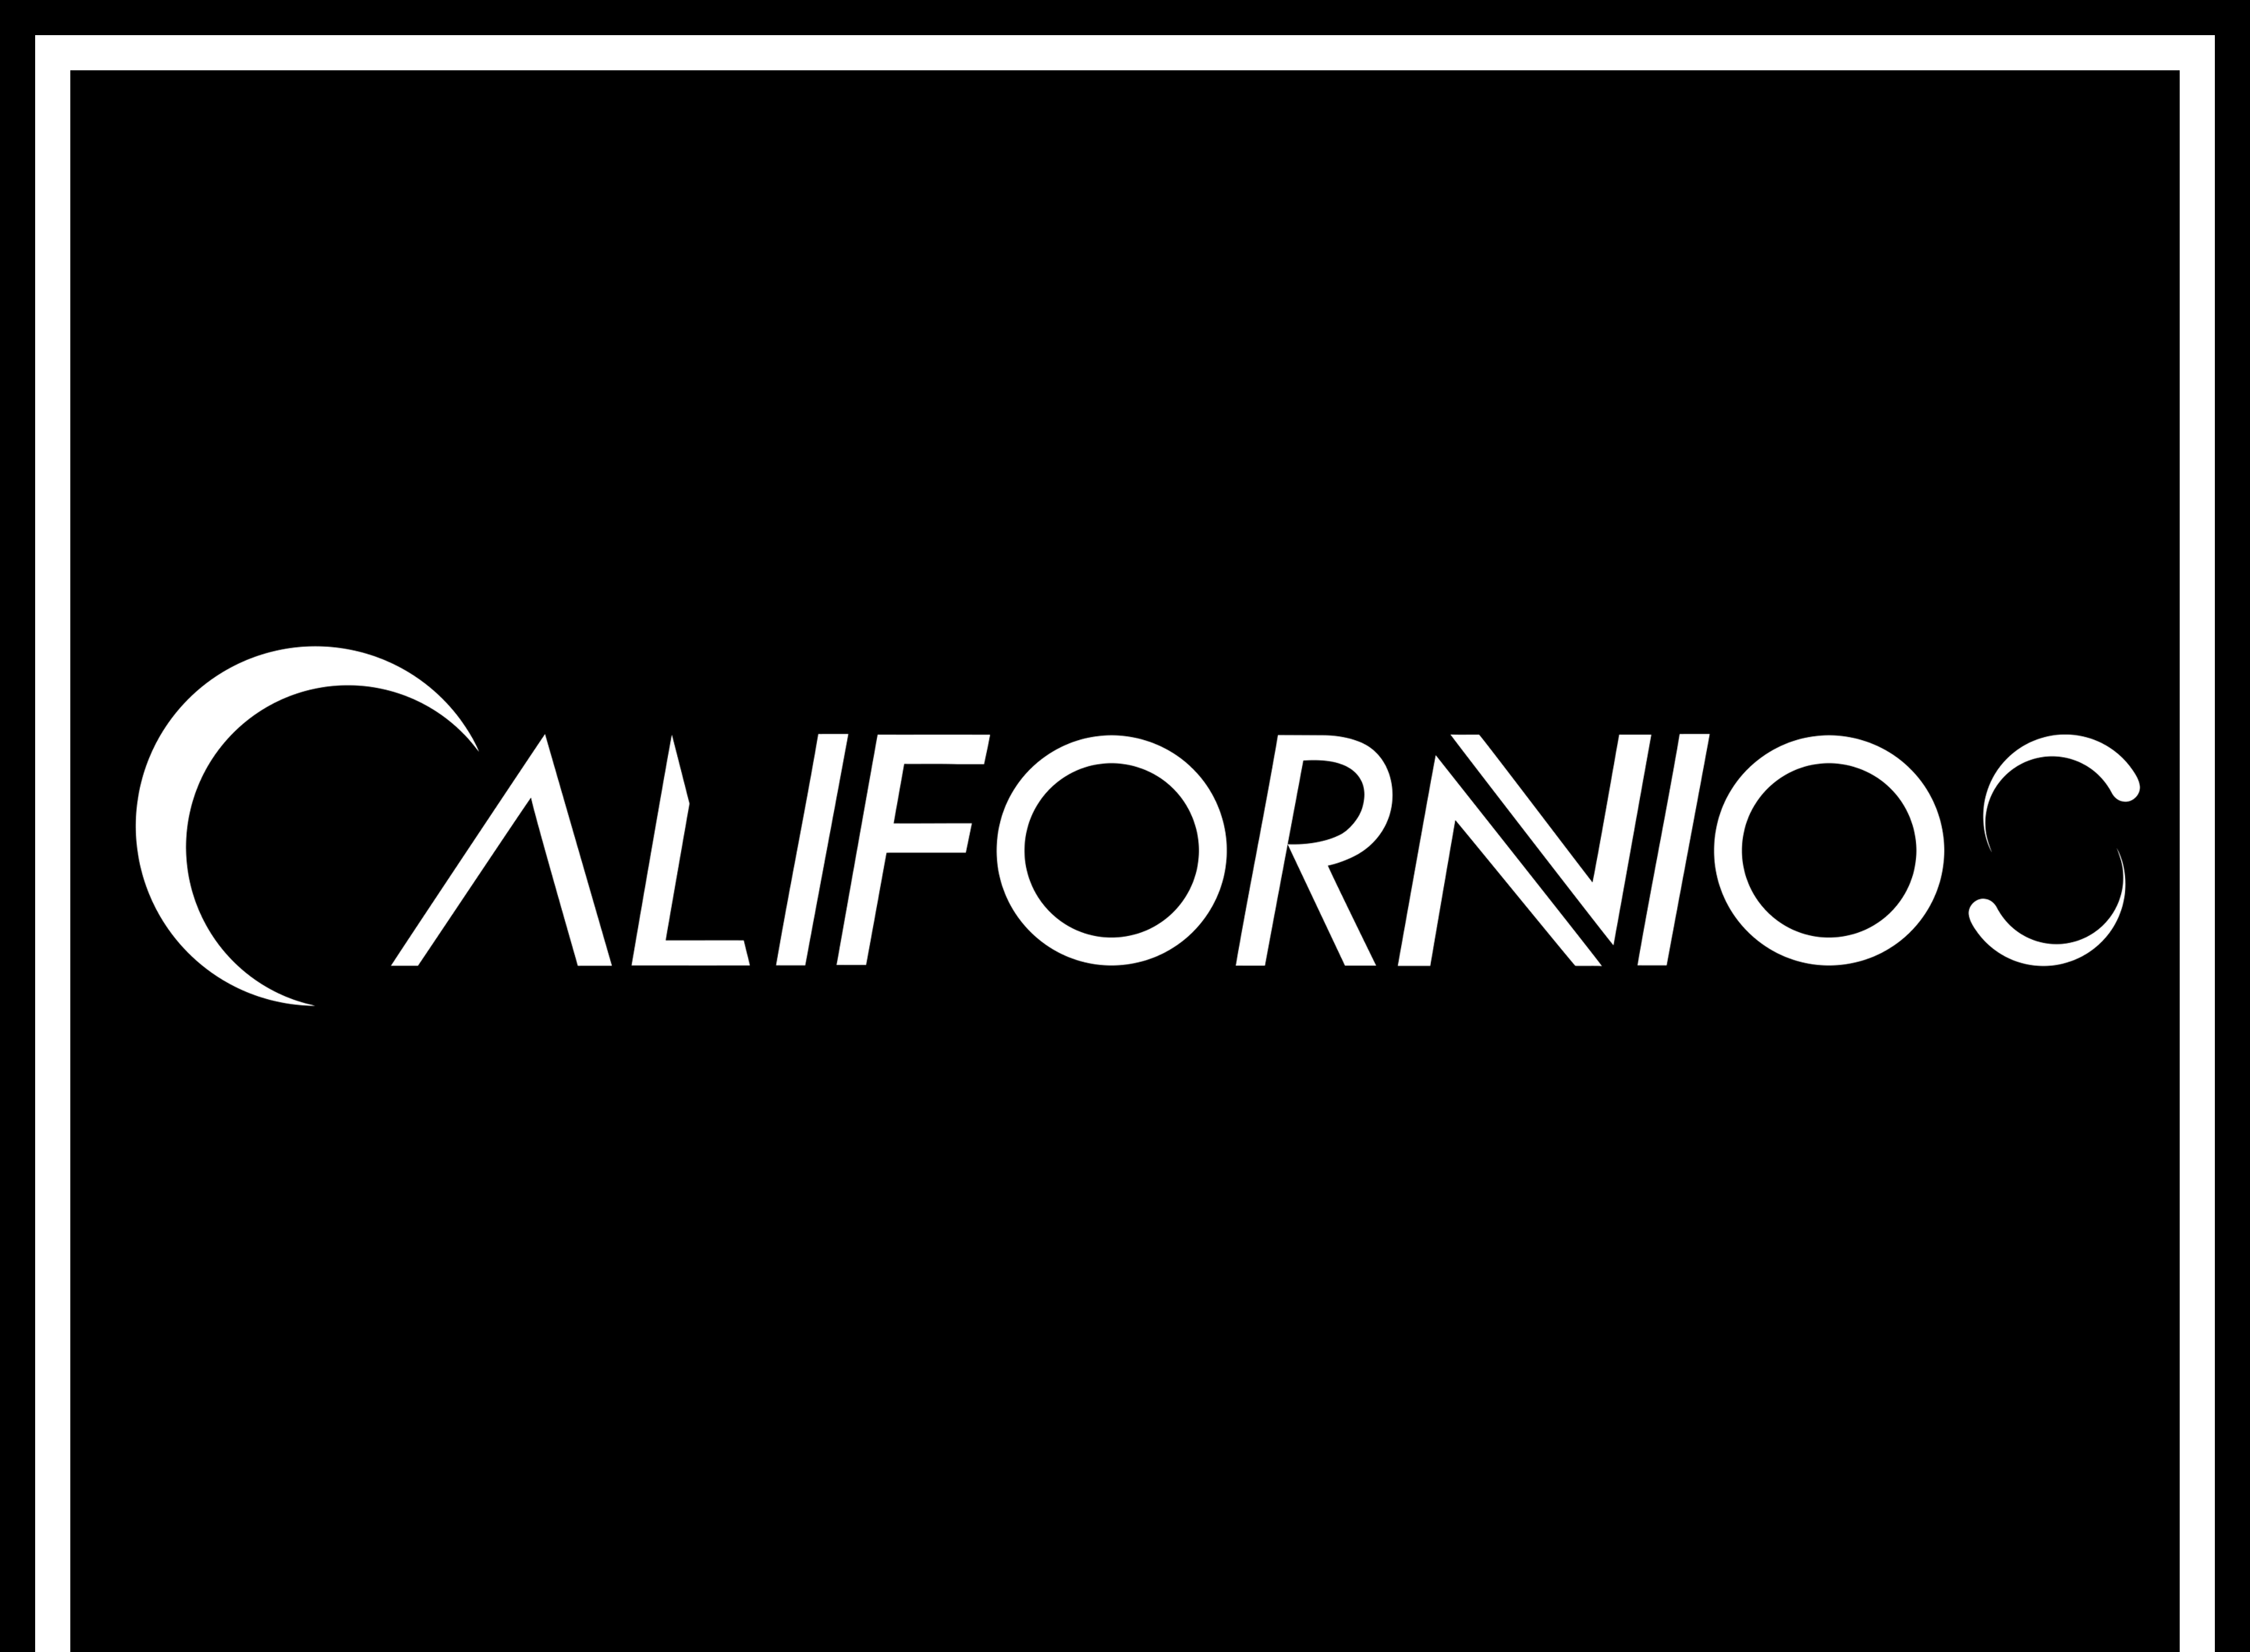 Californios Logo